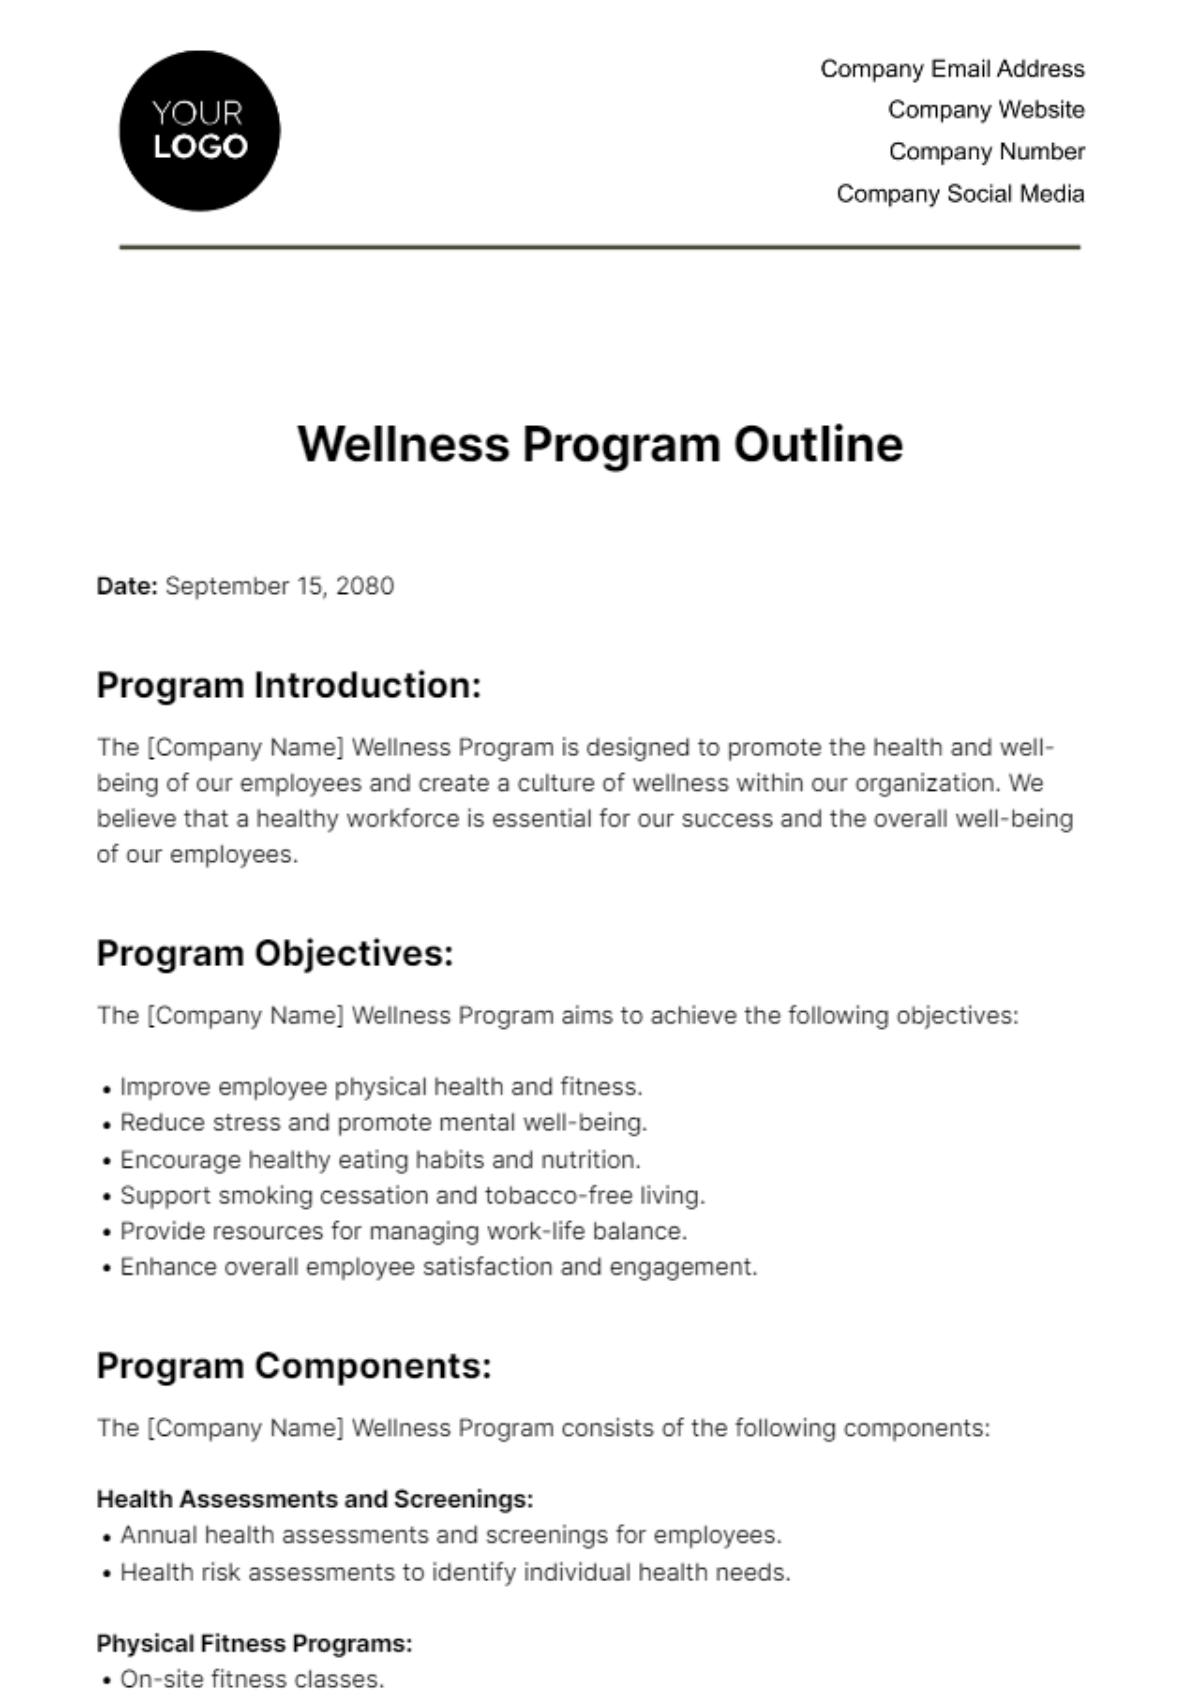 Wellness Program Outline HR Template